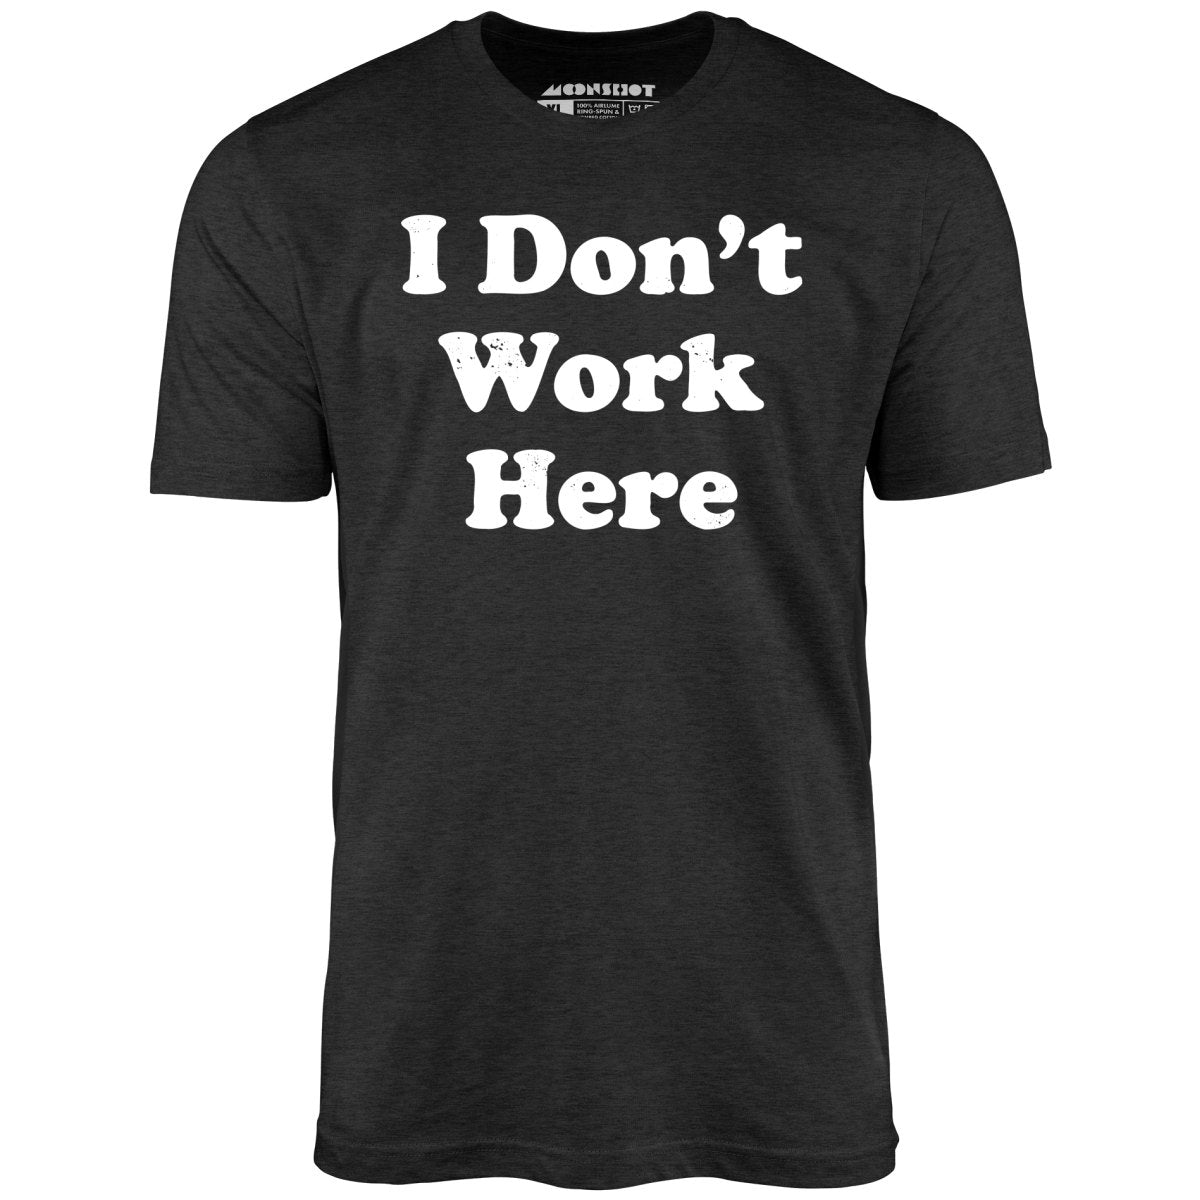 I Don't Work Here - Unisex T-Shirt